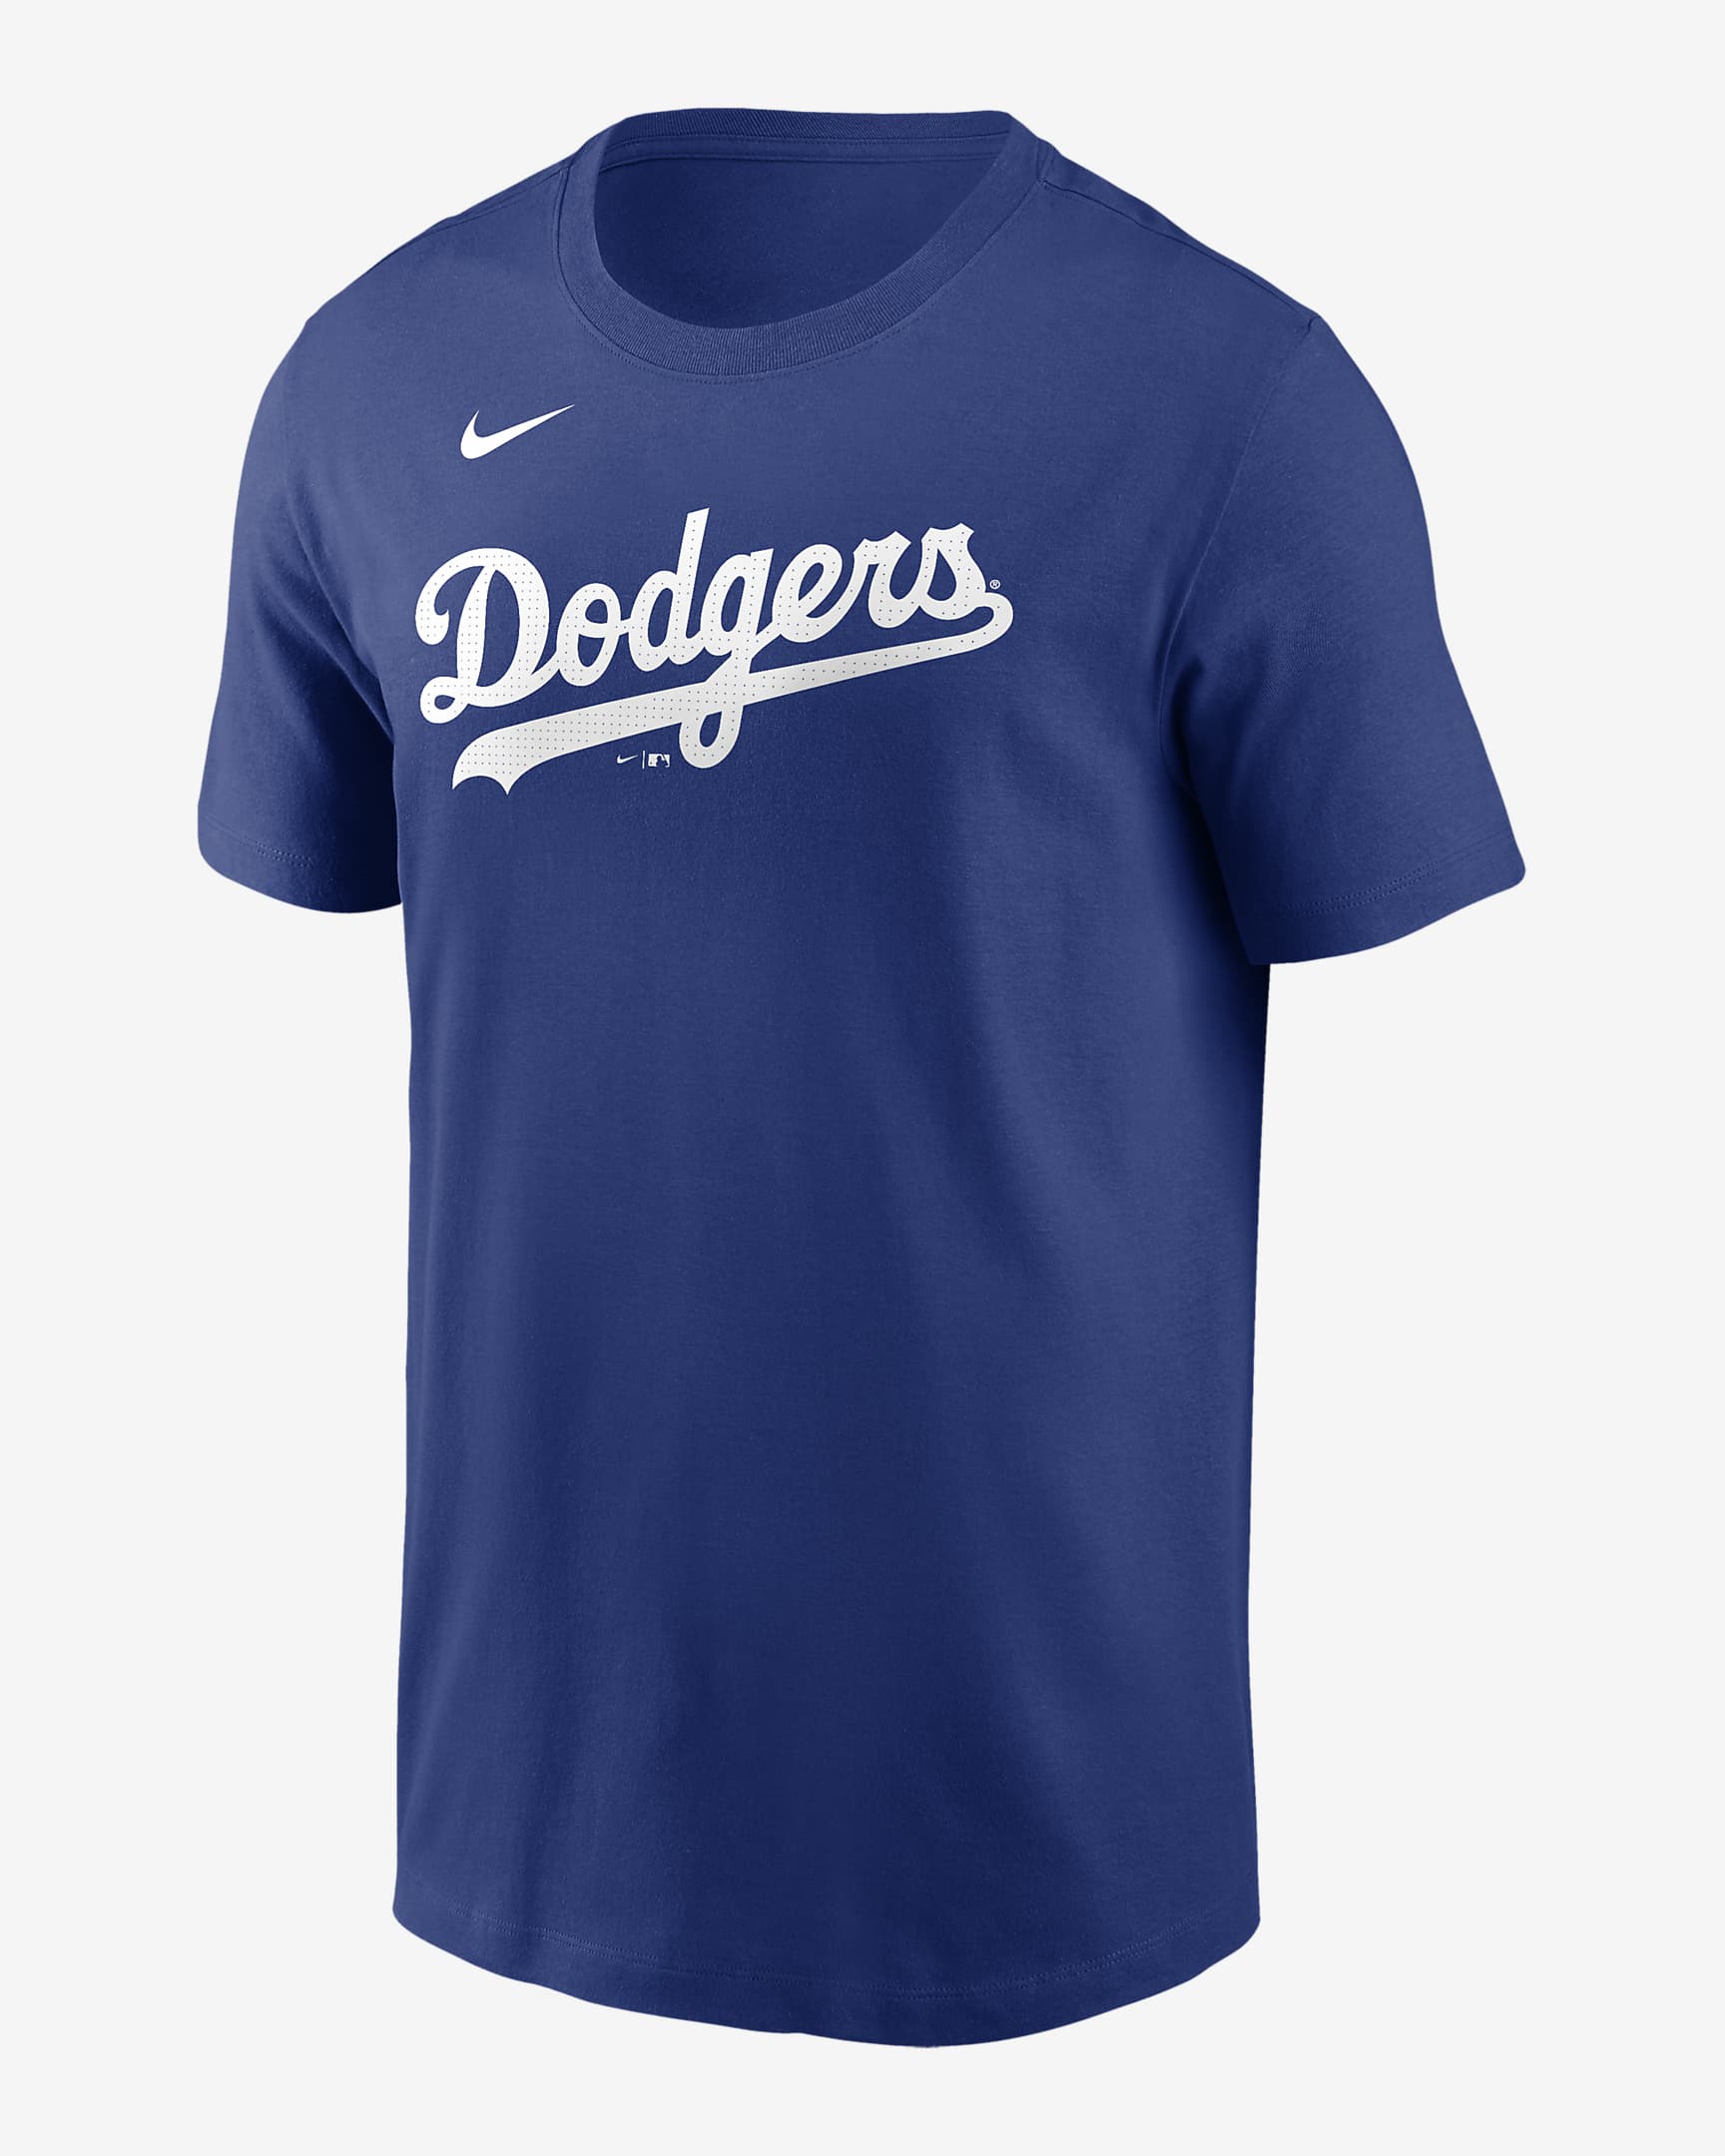 Playera Nike de la MLB para hombre Shohei Ohtani Los Angeles Dodgers ...